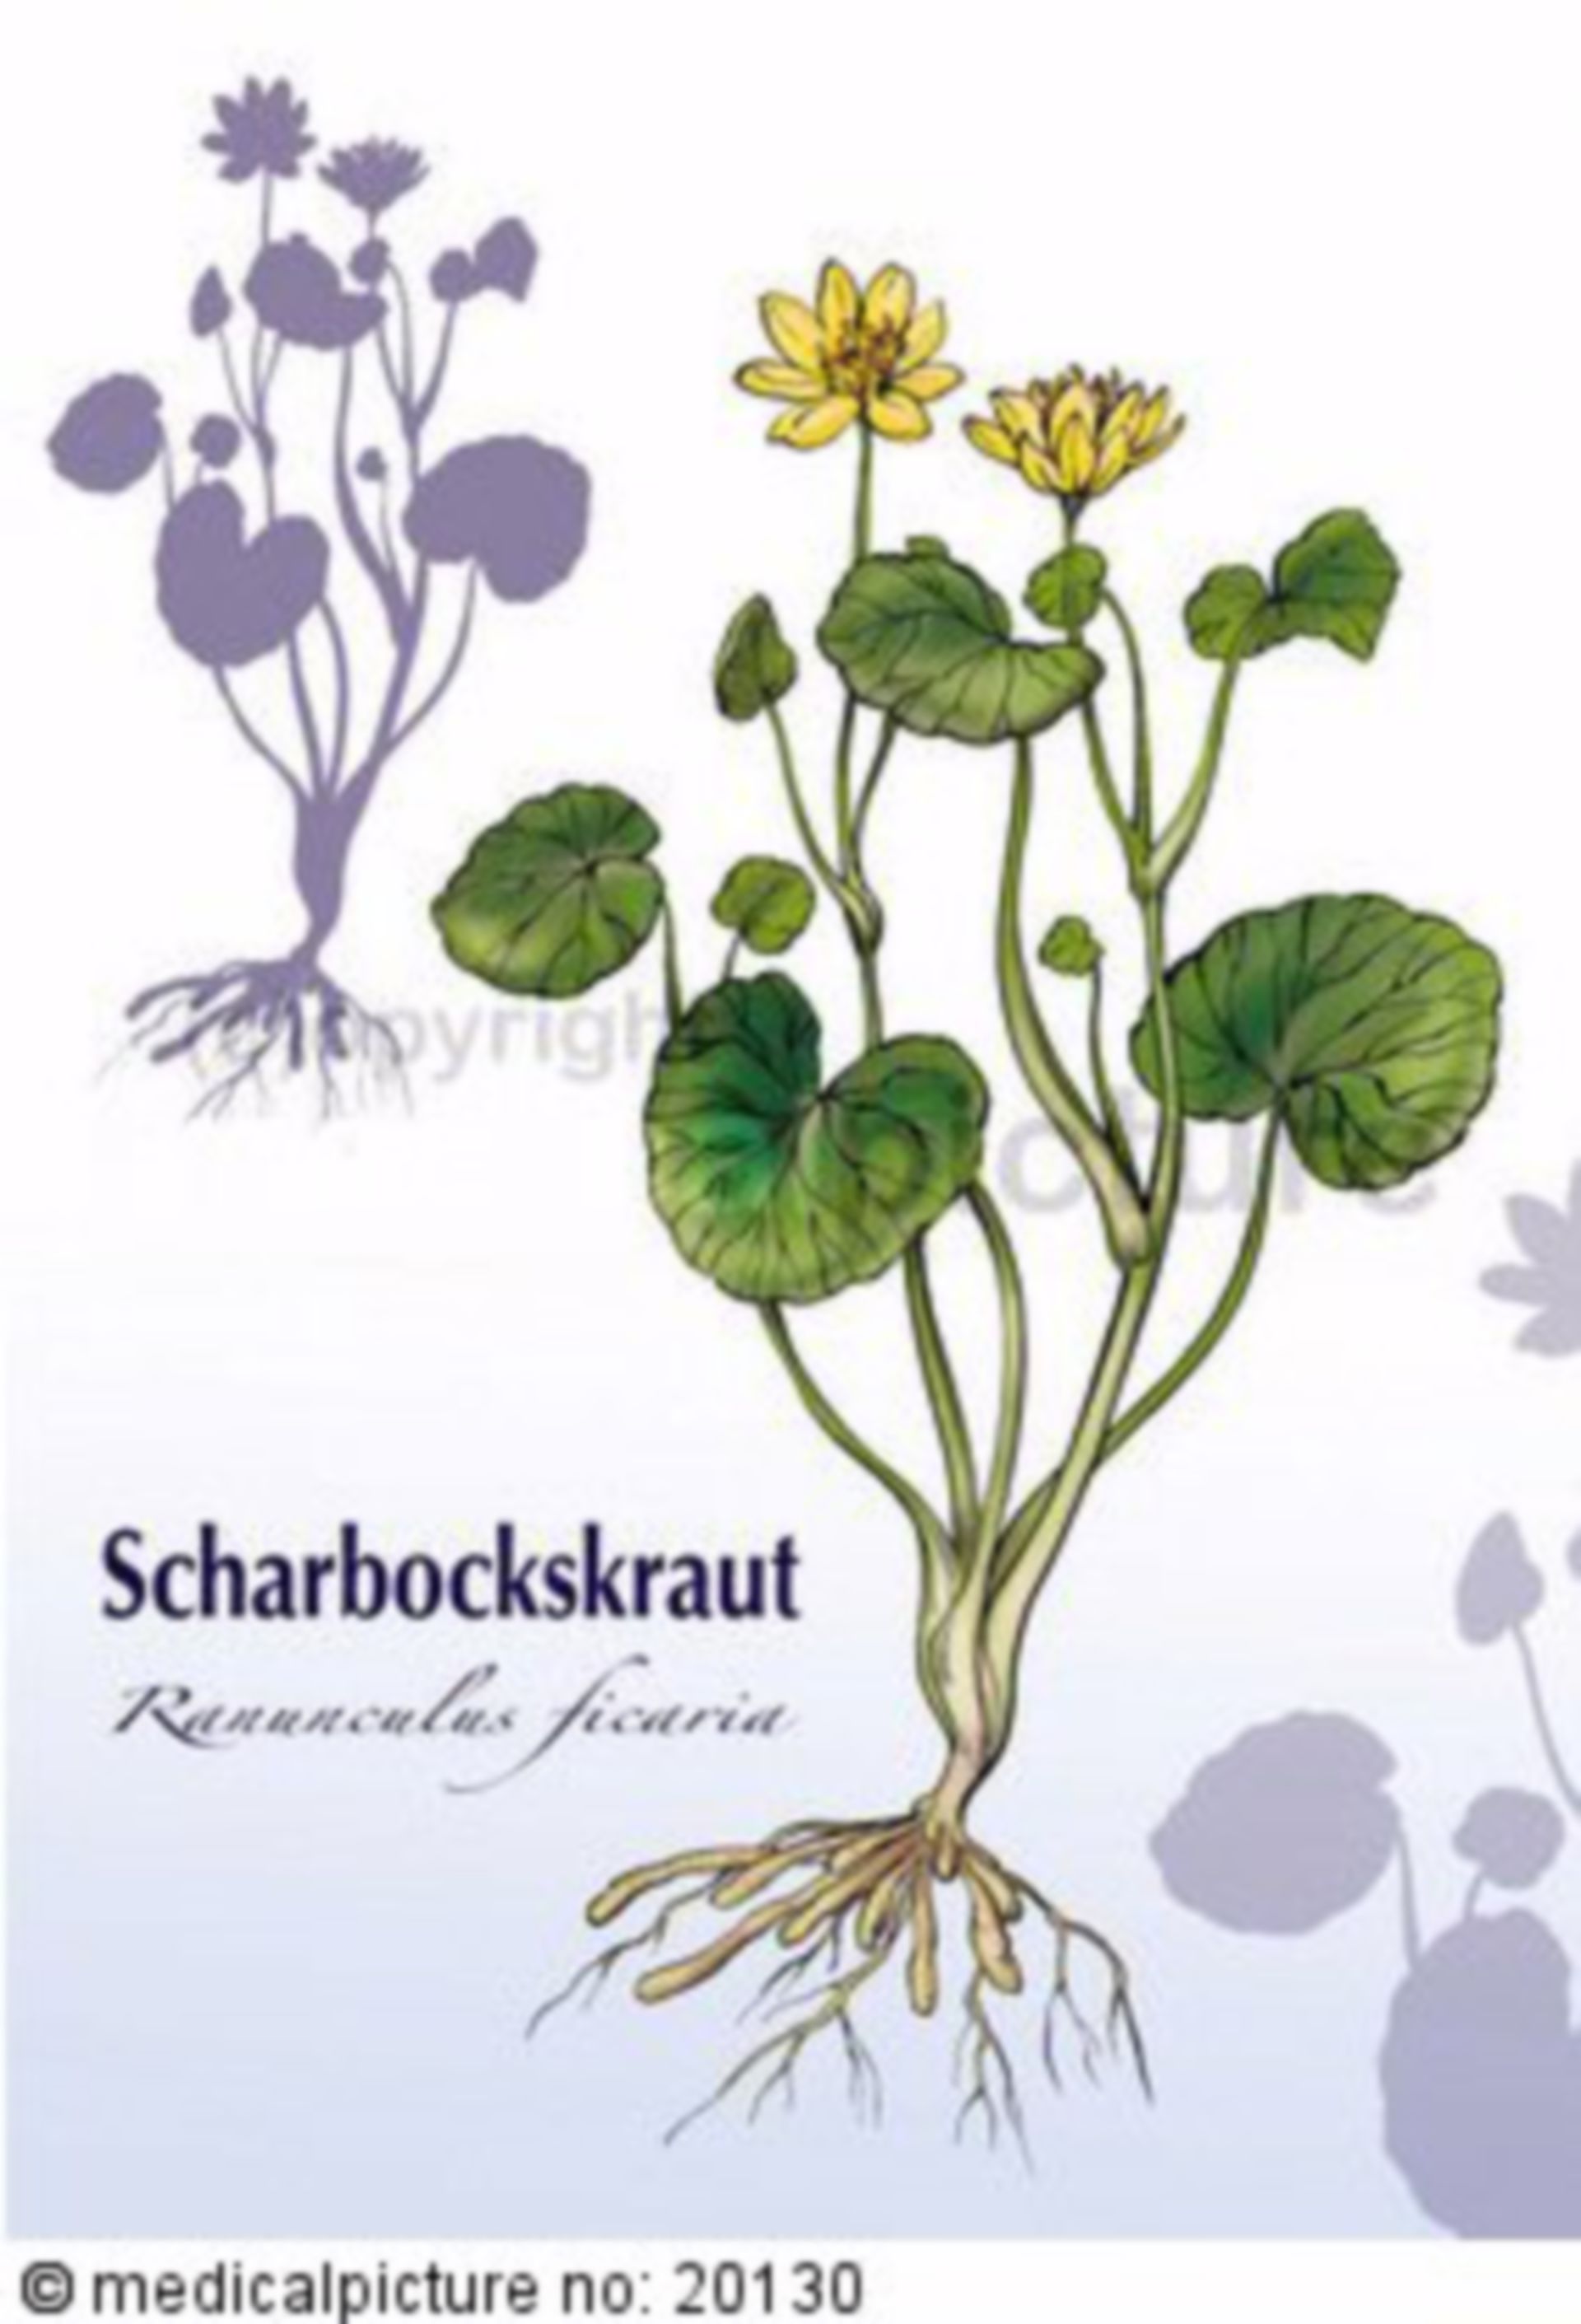  Scharbockskraut, Ranunculus ficaria 
